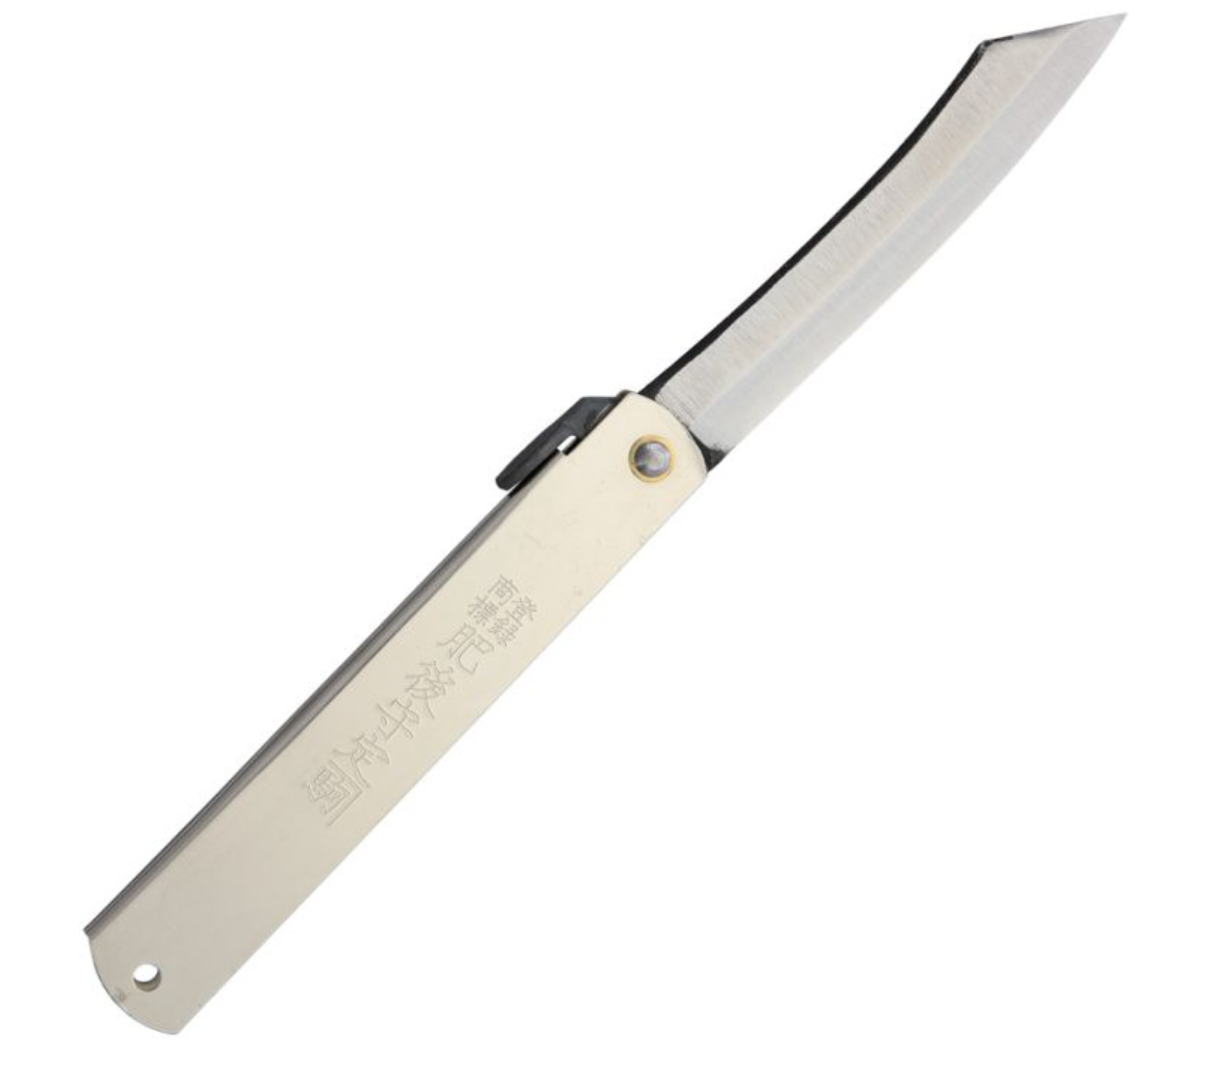 Higonokami No 5 Silver Folder Knife